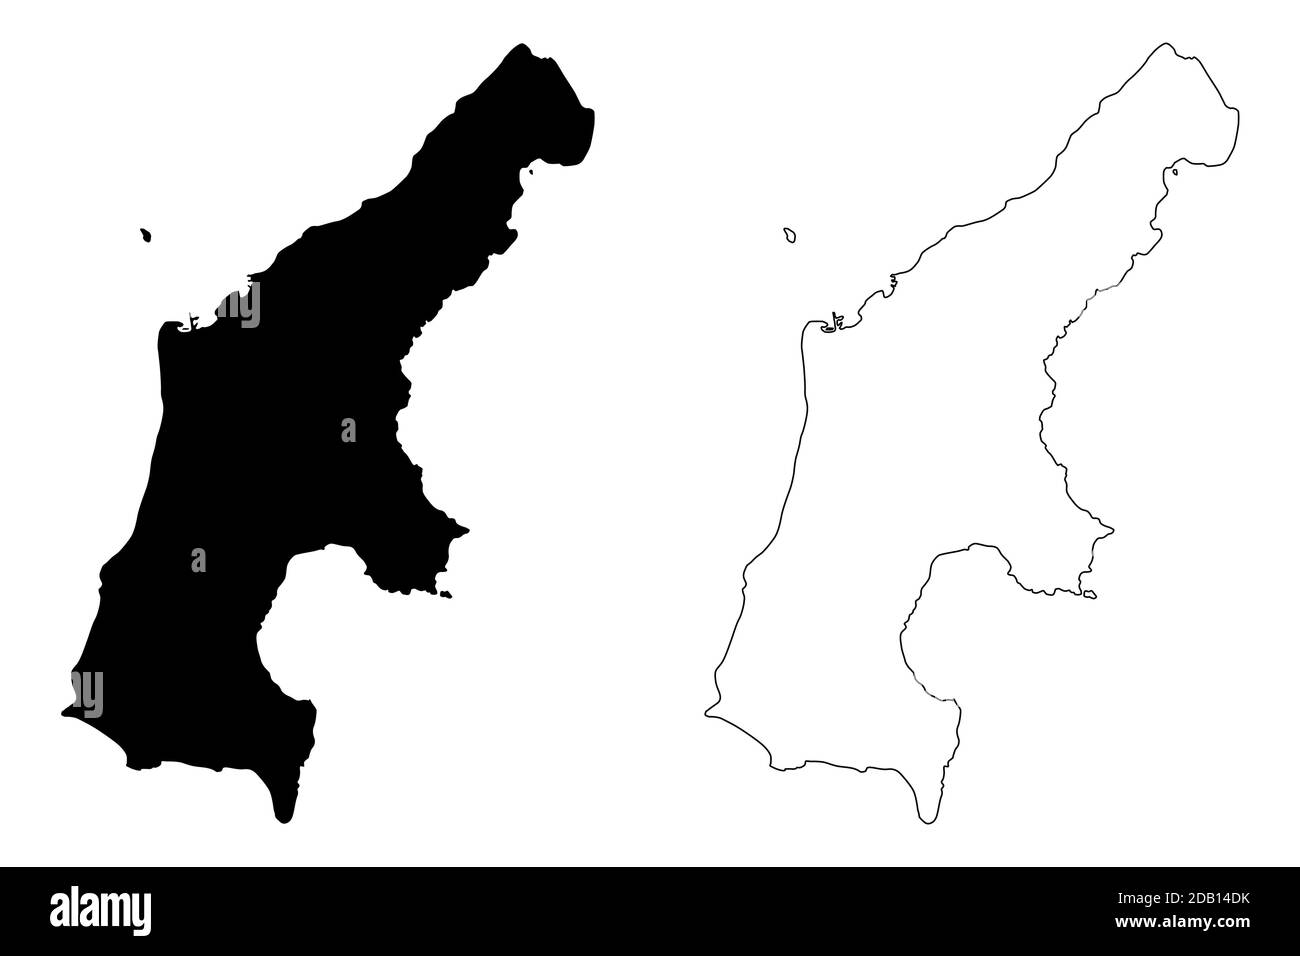 Saipan Municipality, Commonwealth of the Northern Mariana Islands (United States of America, USA,  Mariana Archipelago) map vector illustration, scrib Stock Vector